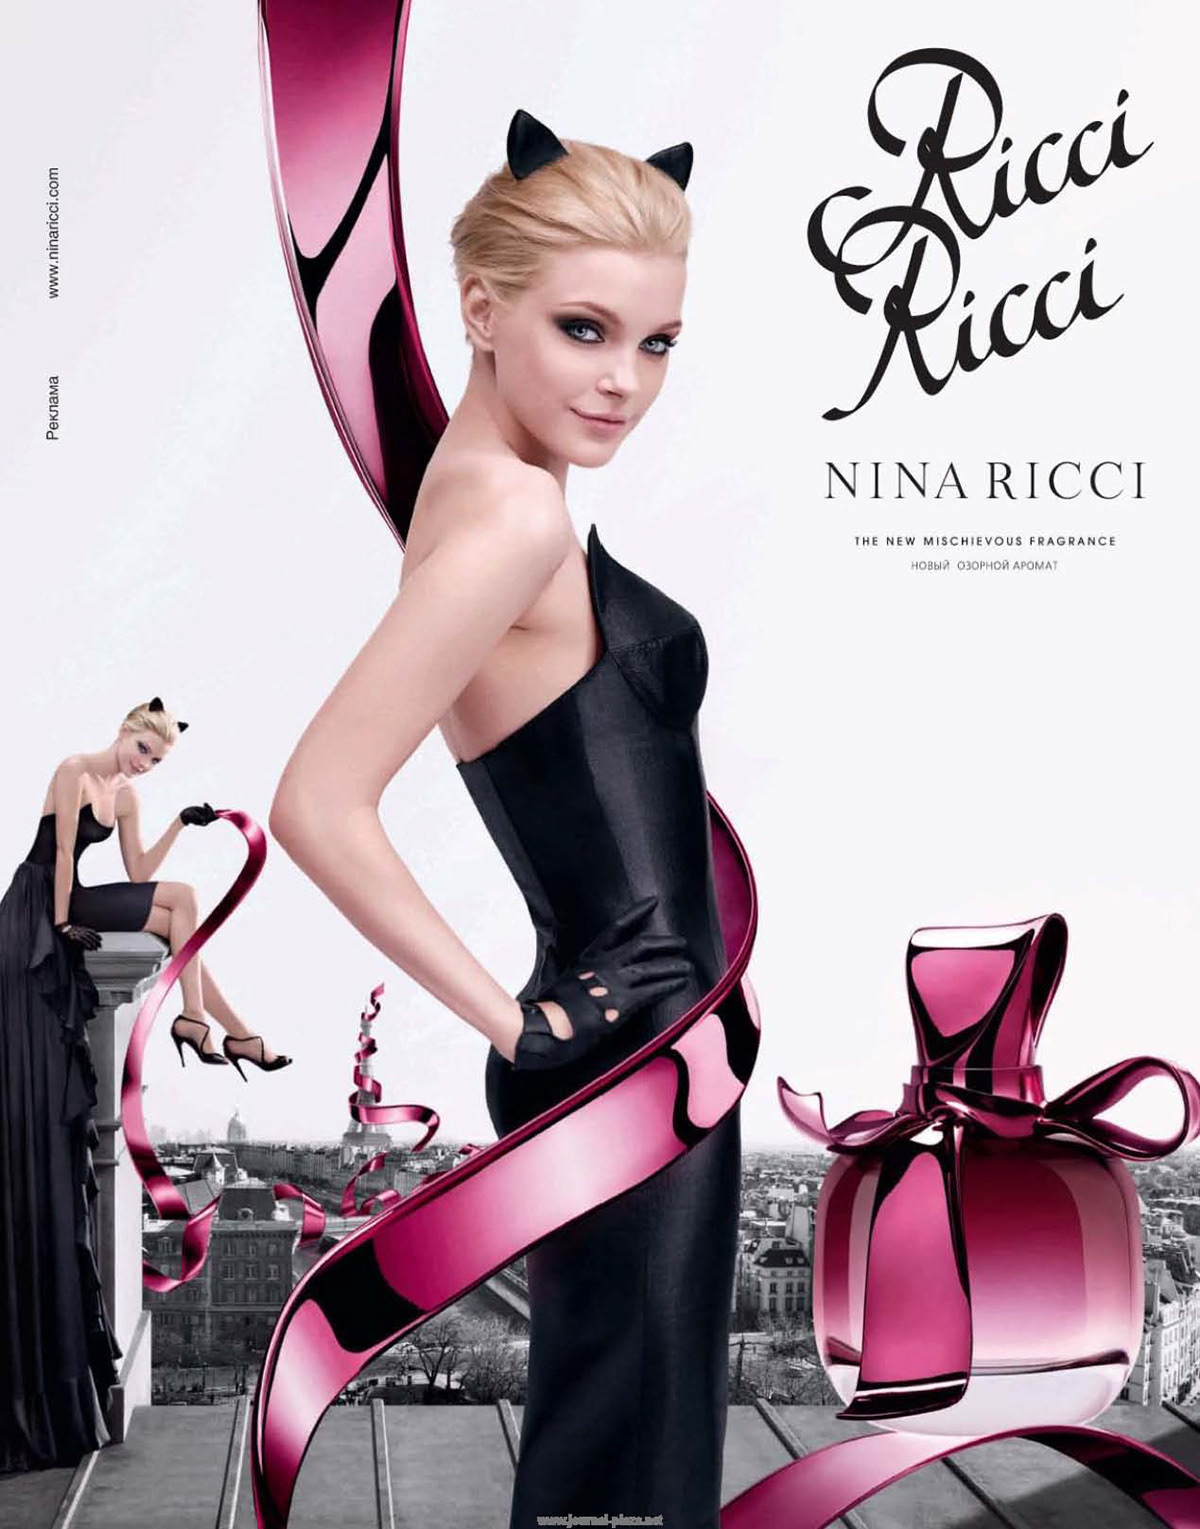 ricci ricci parfum pub publicity Nina Ricci Marker promarker draw women black White blackandwhite pink